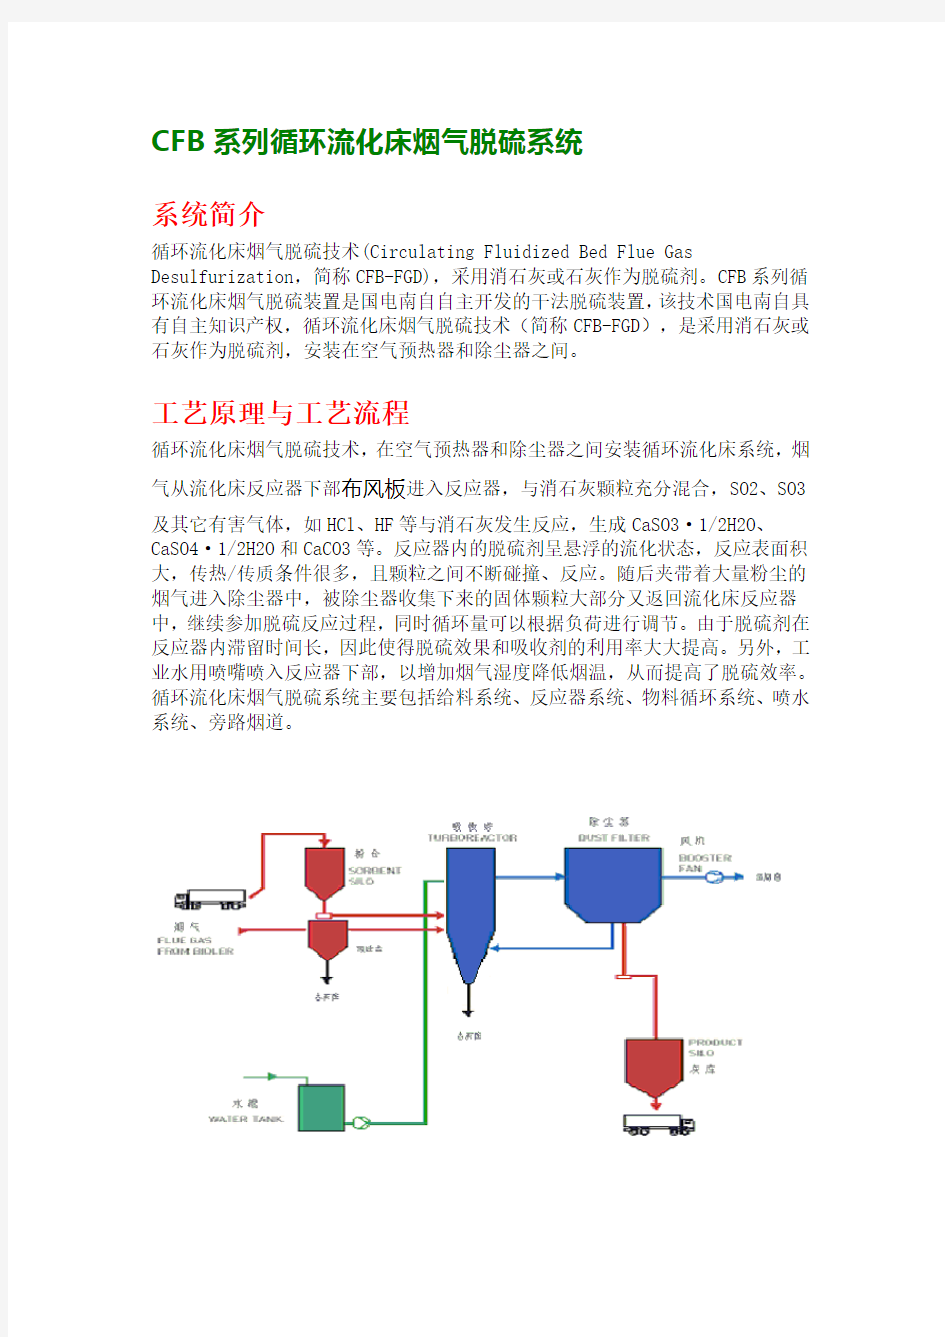 CFB系列循环流化床烟气脱硫系统